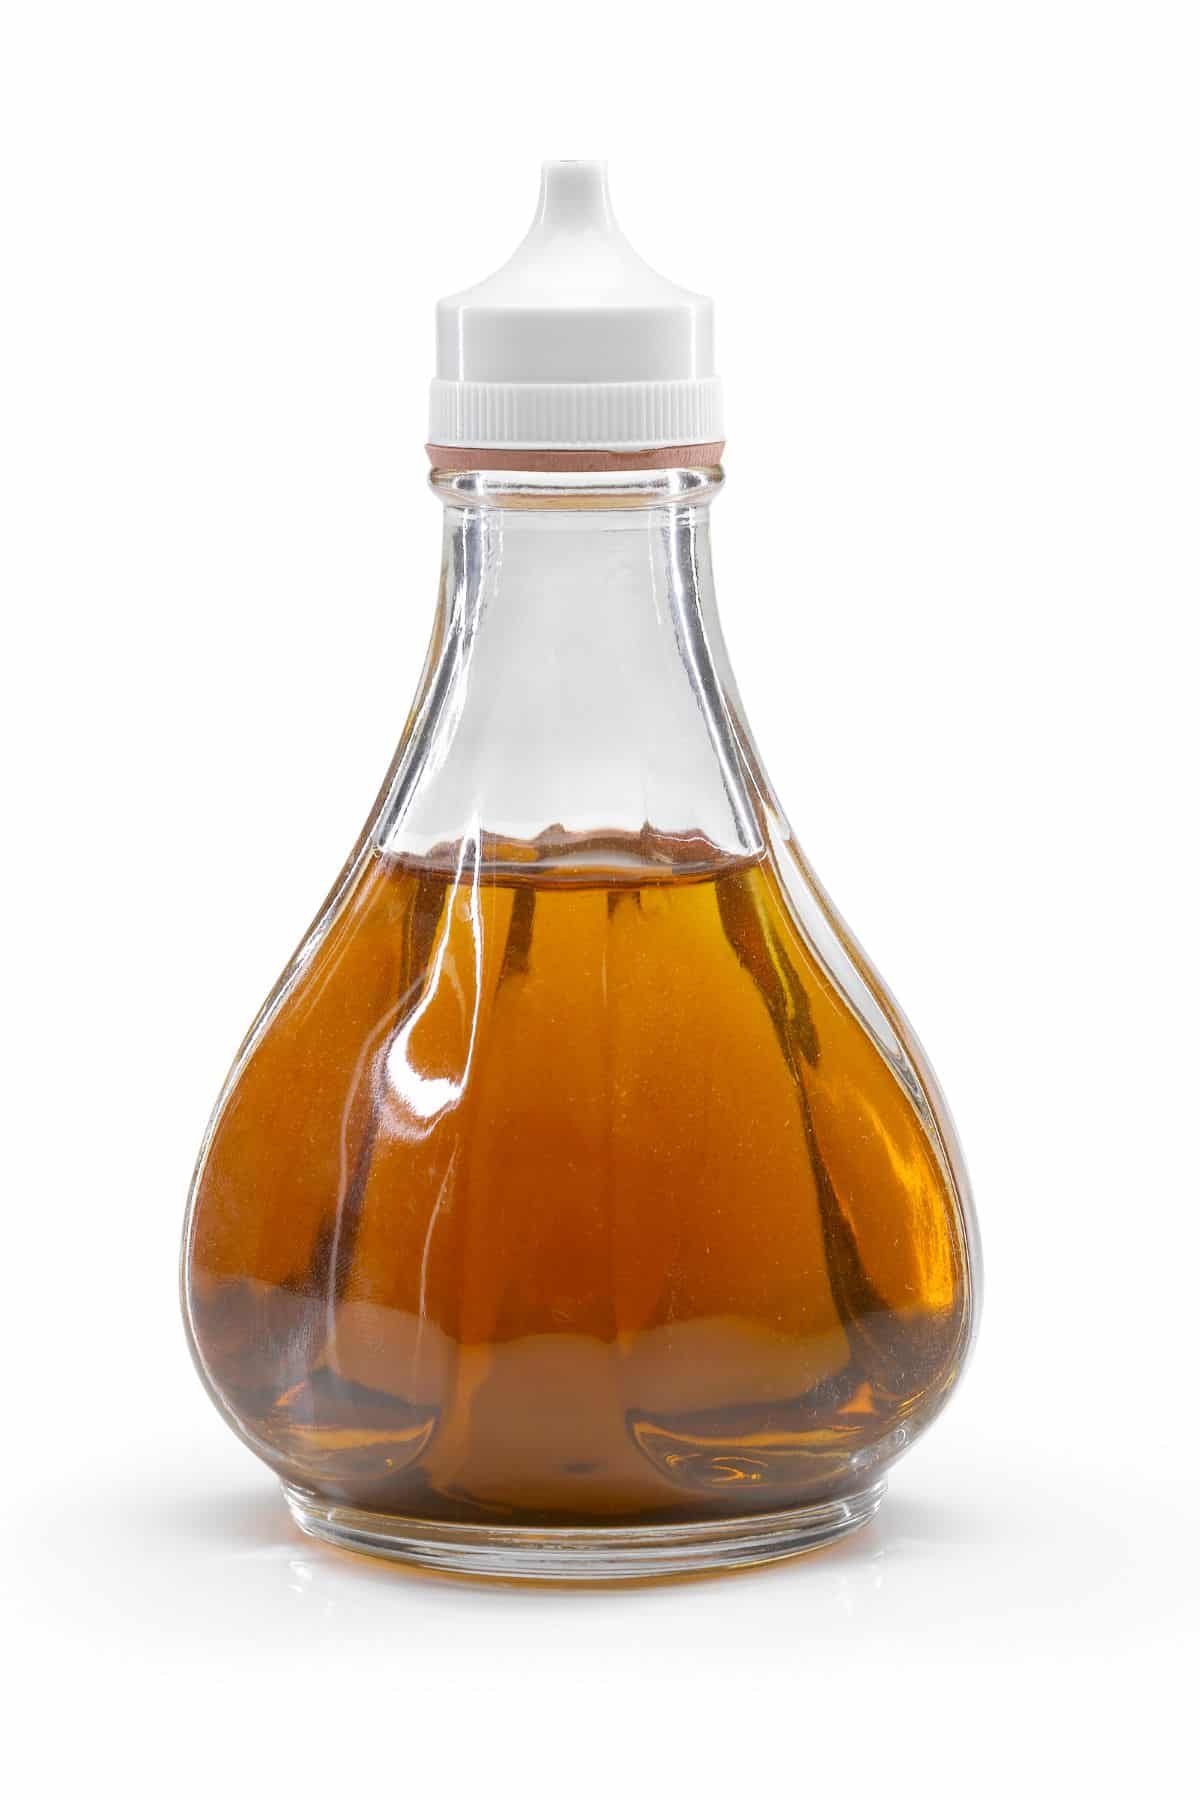 Bottle of Sherry Vinegar with white cap.